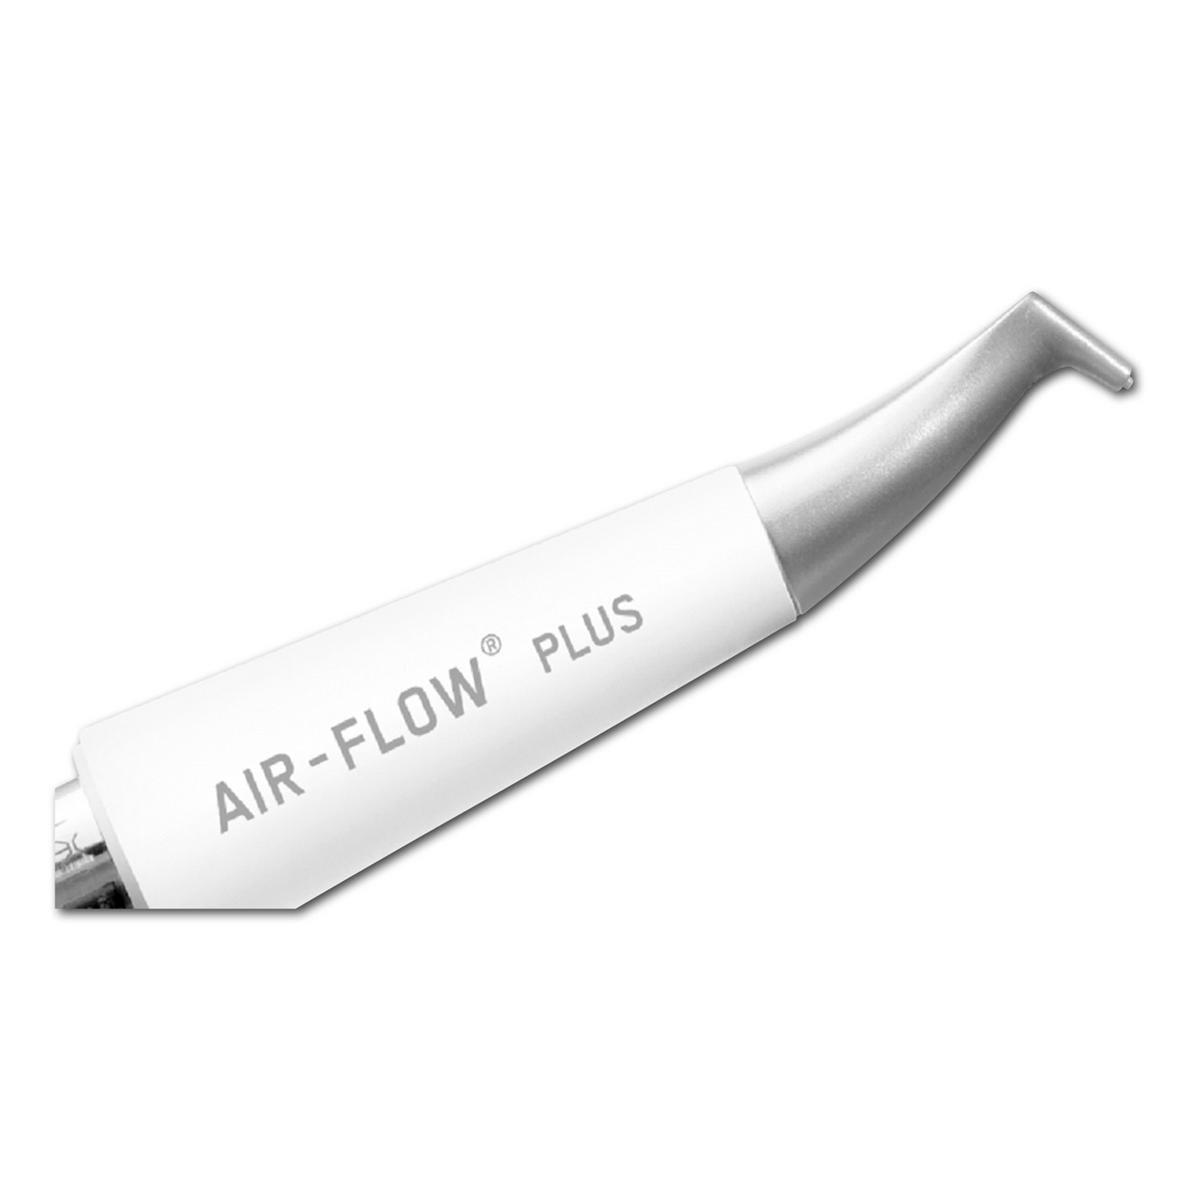 Air-Flow Handy 3.0 pice  main - pice  main Plus